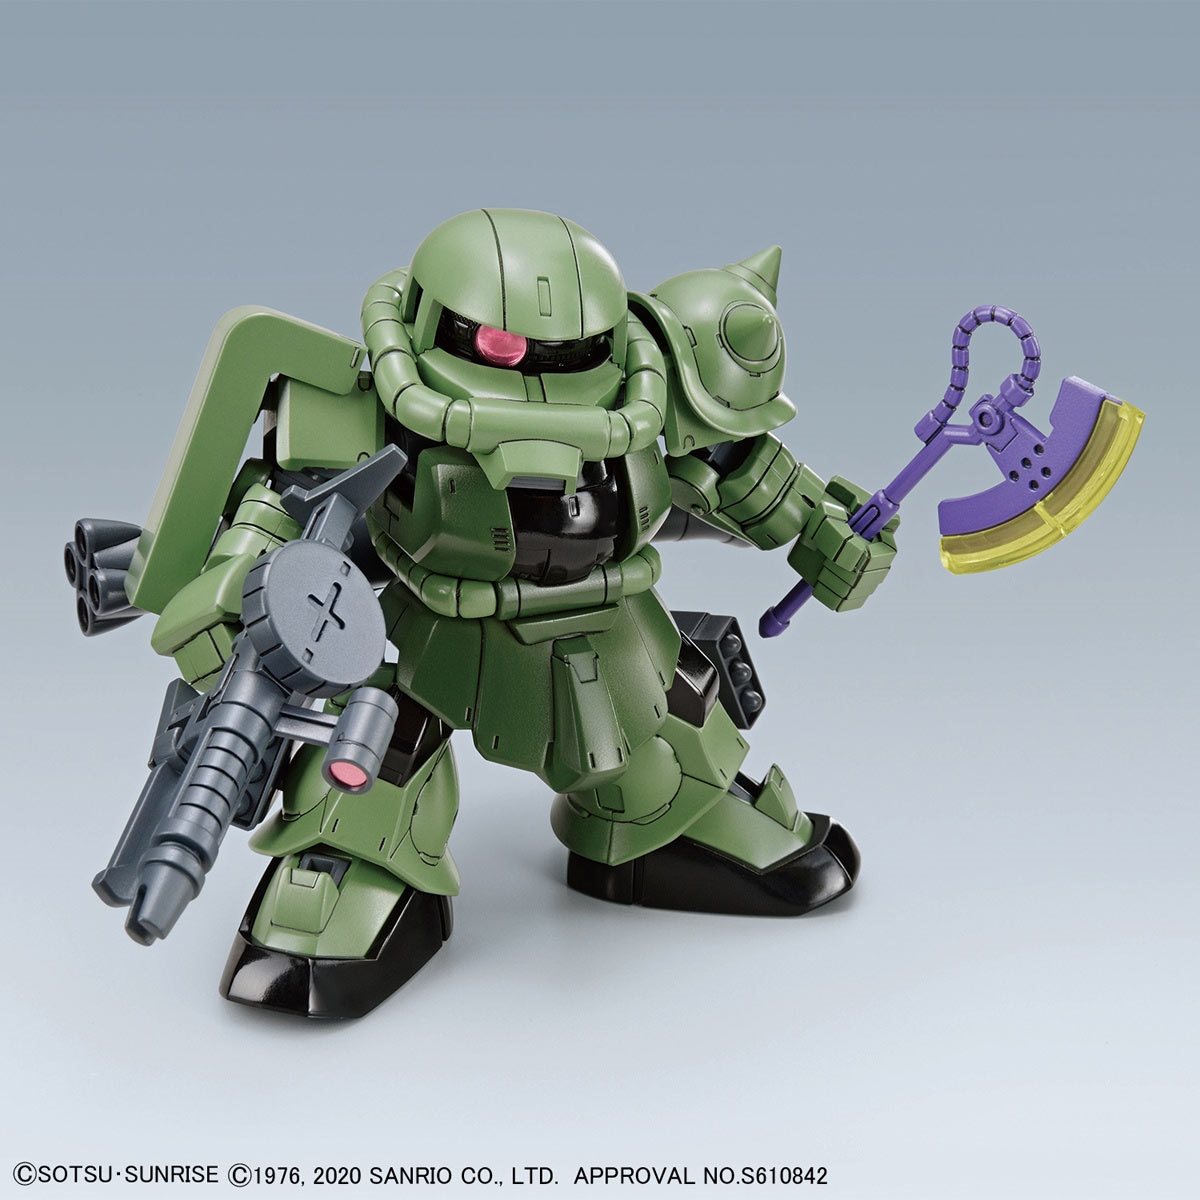 Bandai Hobby Gunpla Model Kit: Mobile Suit Gundam Hello Kitty - Hello Kitty y Zaku II Kit De Plastico